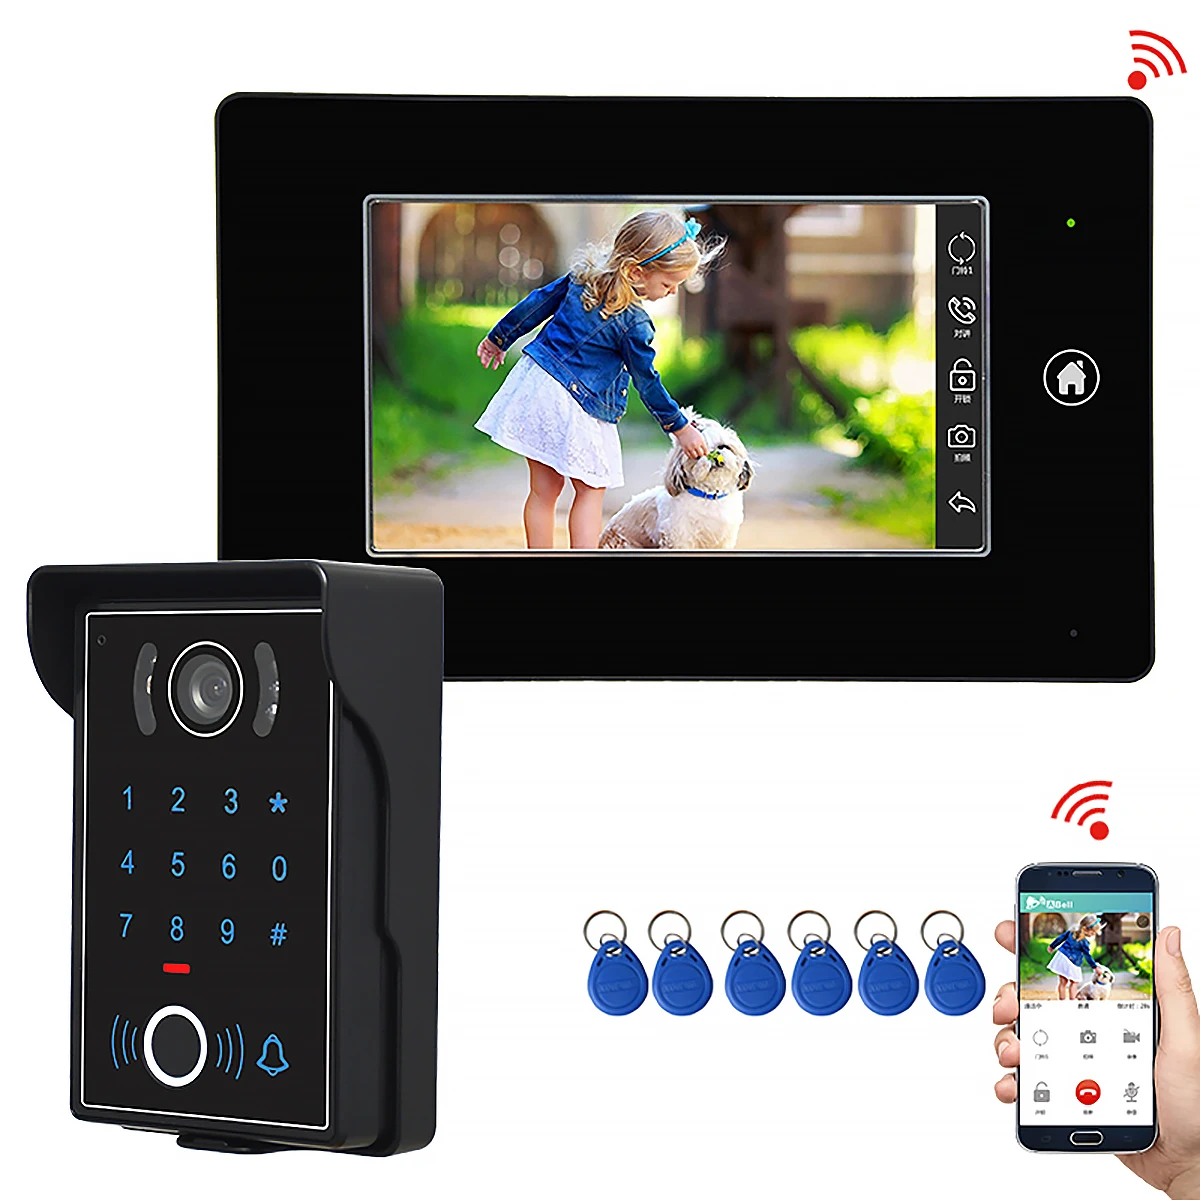 

7 Inch Wired Wireless Wifi Video Doorbell System, Video Intercom Door Phone Support Video Recording Password RFID Keyfob Unlock